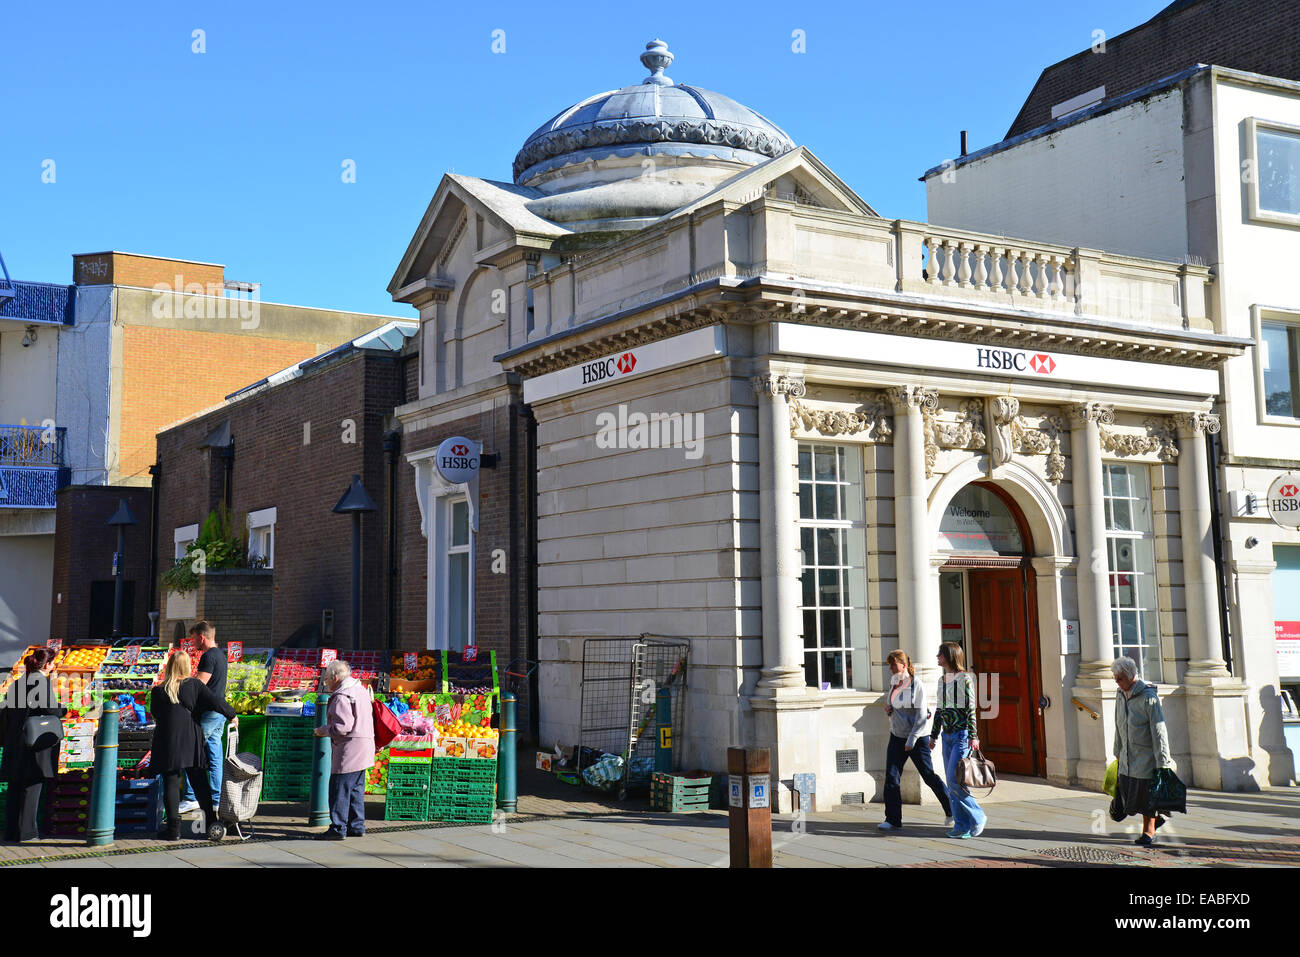 HSBC Bank and street fruit stall, High Street, Watford, Hertfordshire, England, United Kingdom Stock Photo